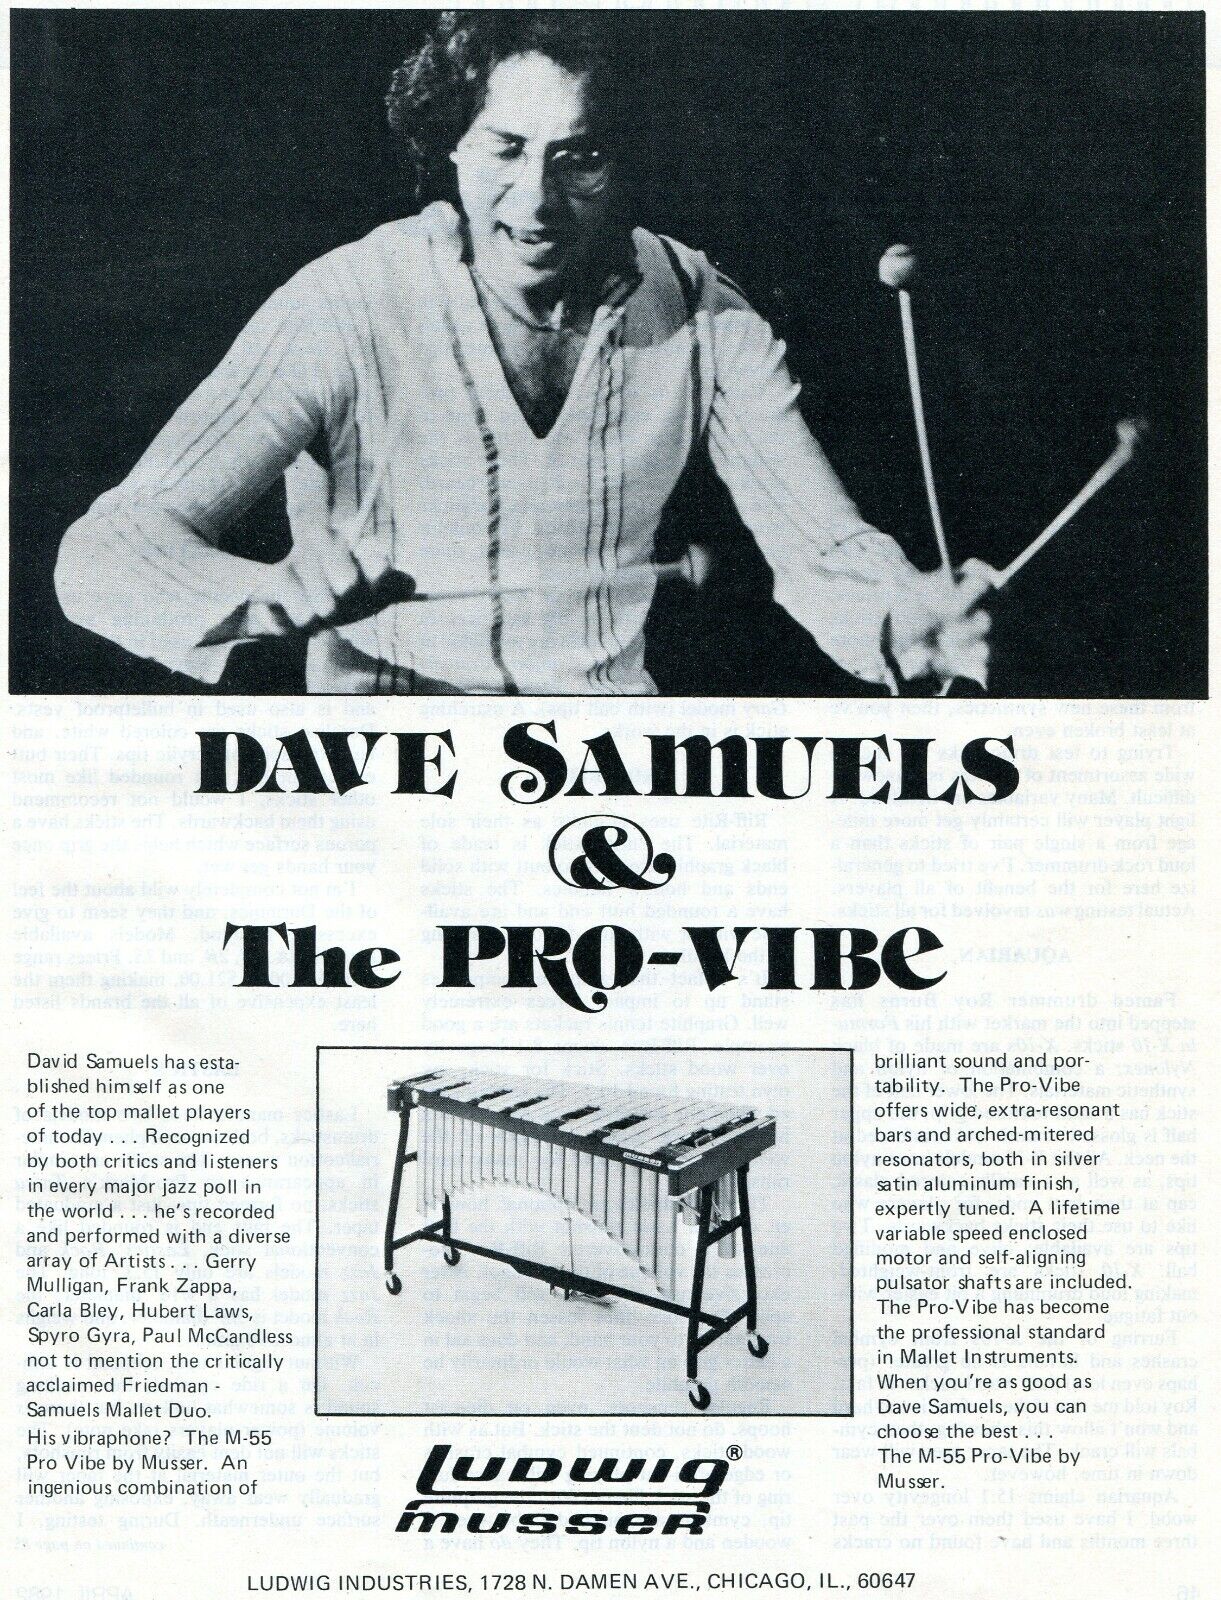 1981 Print Ad of Ludwig Musser M55 Pro-Vibe Vibraphone w Dave Samuels